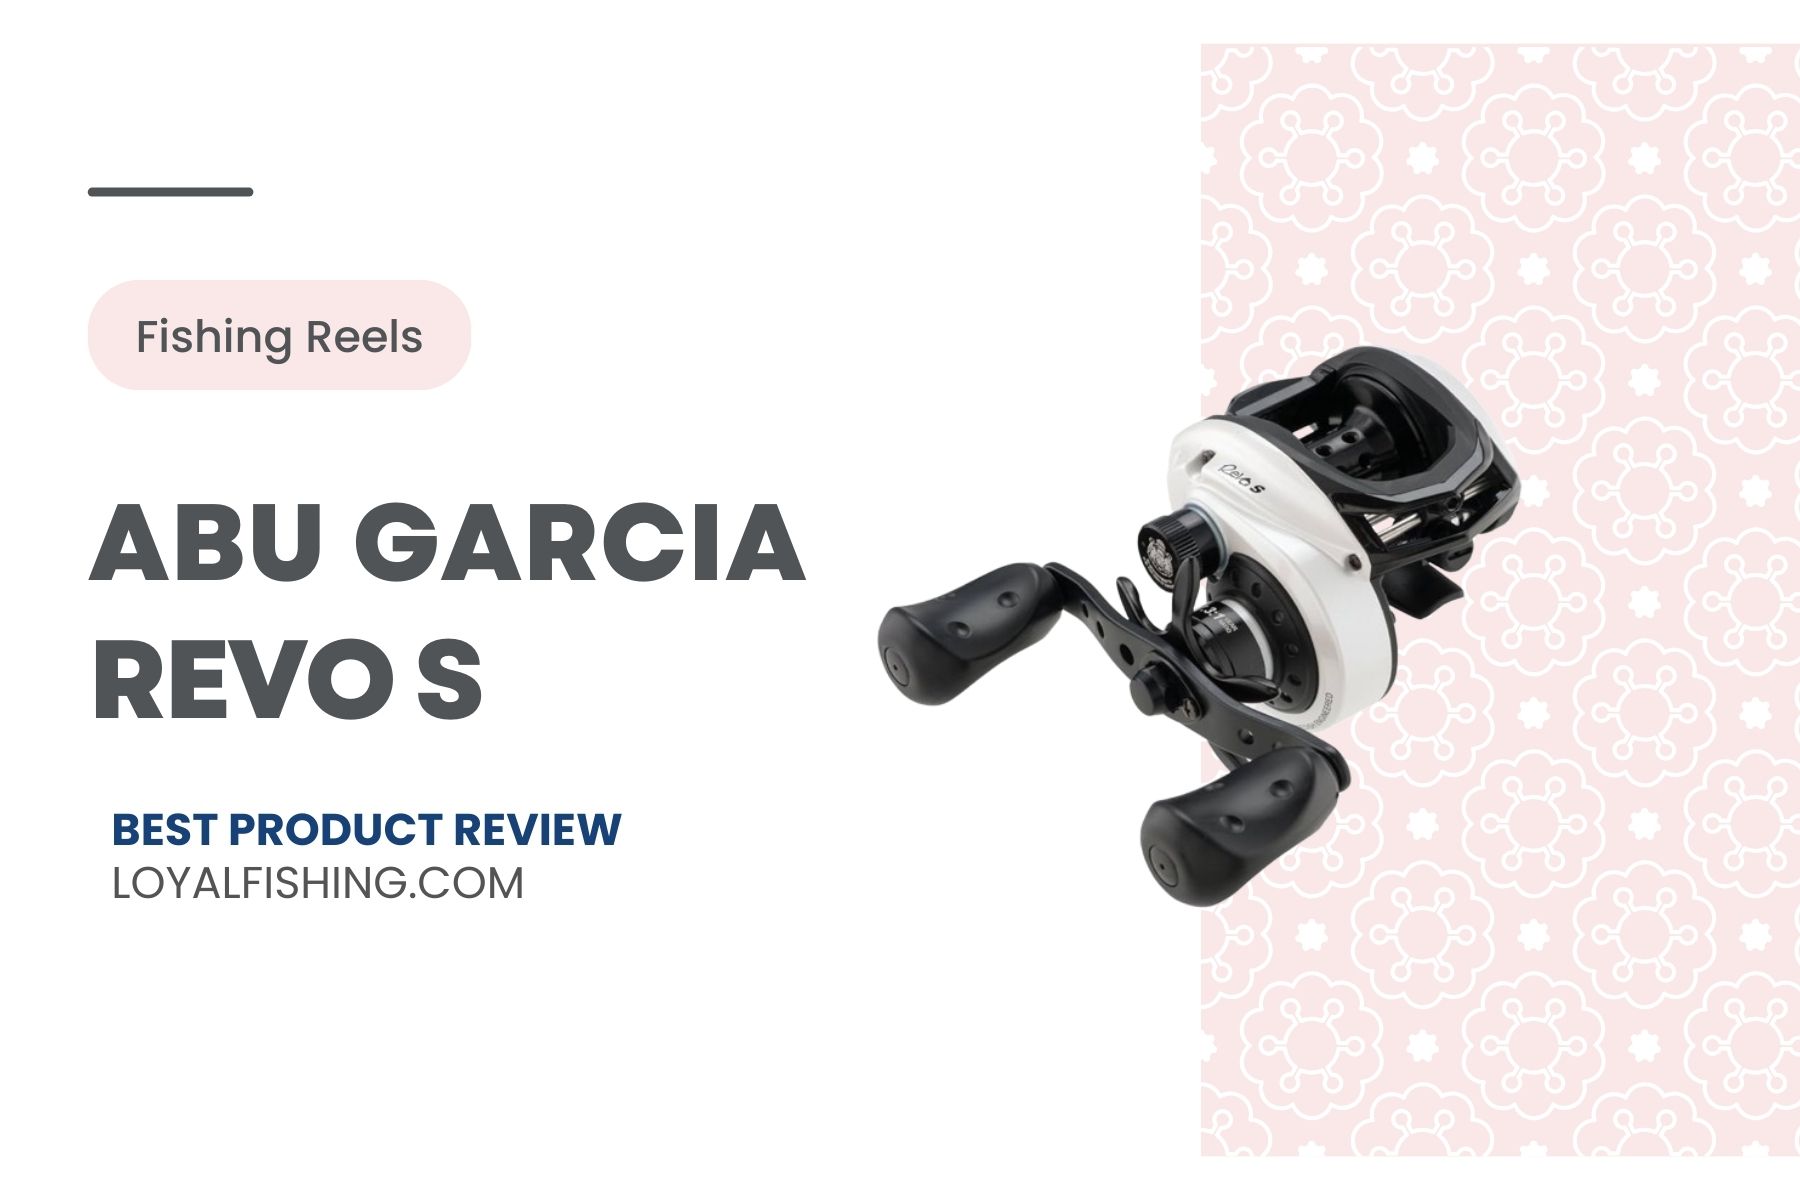 Abu Garcia Revo S - Post Review